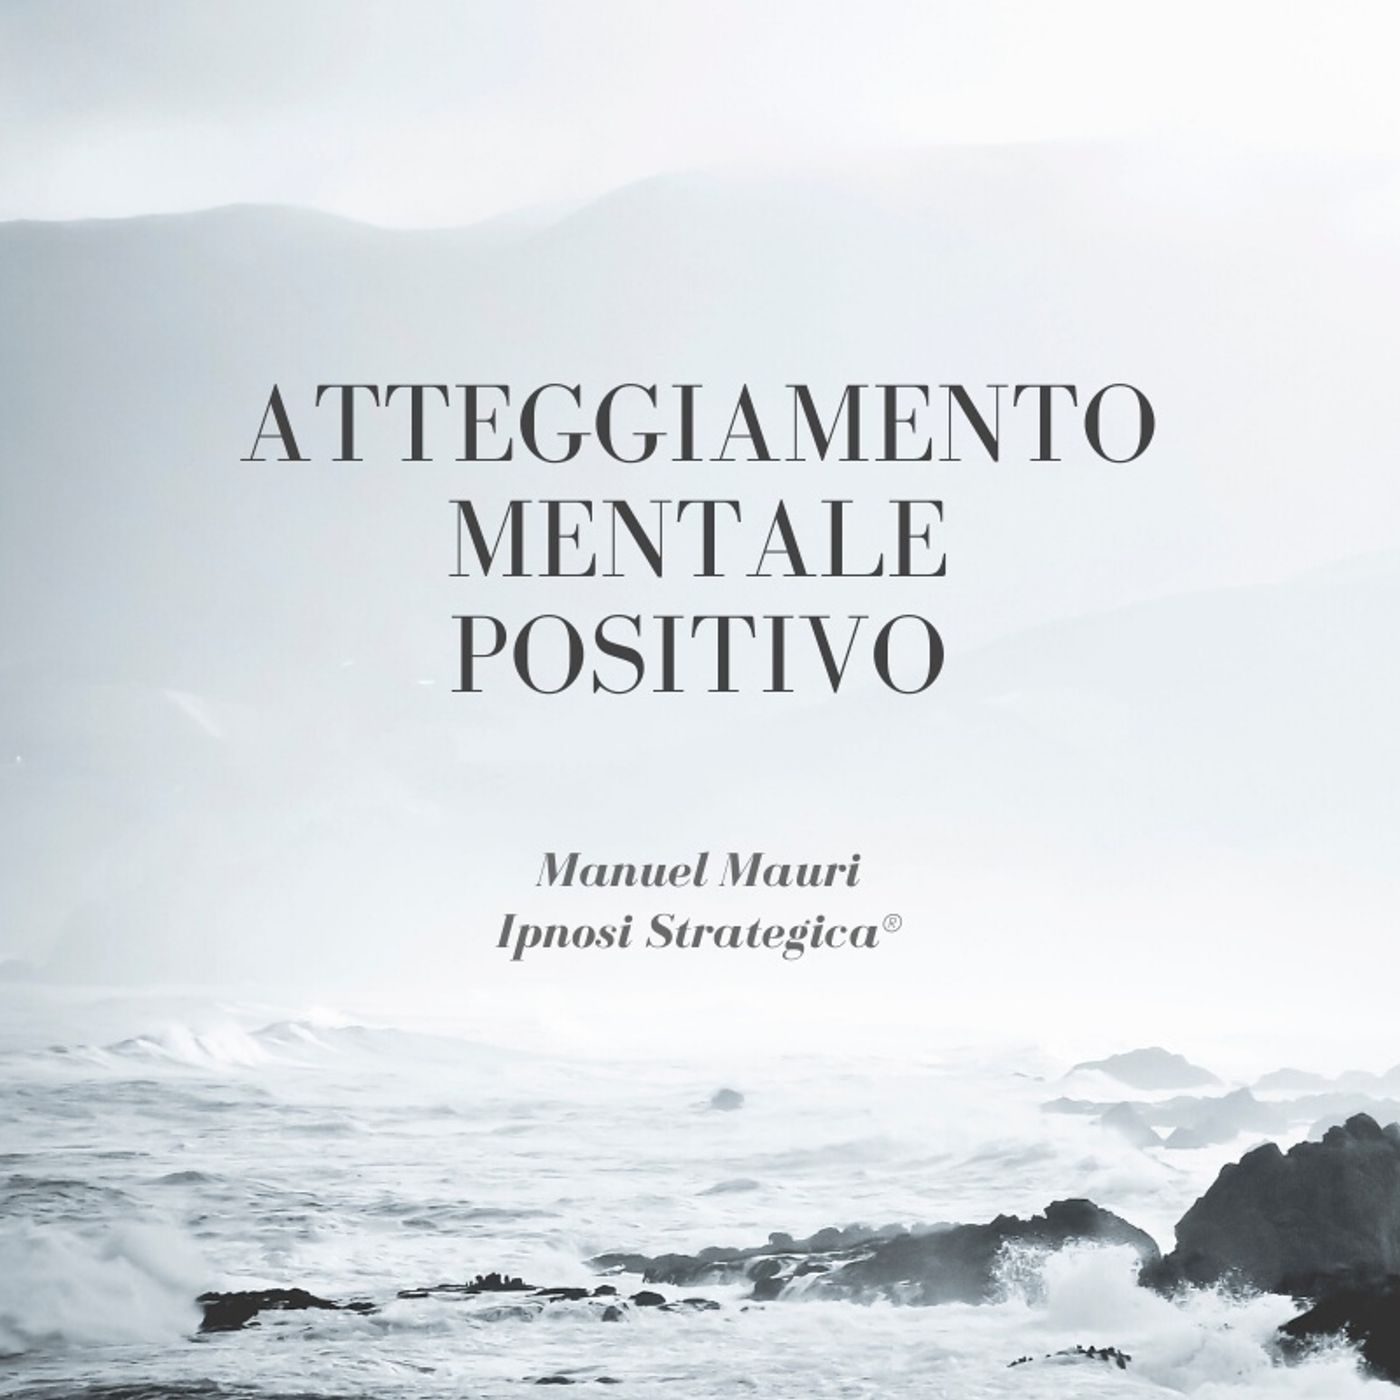 Atteggiamento Mentale Positivo  | Ipnosi Strategica® | Manuel Mauri